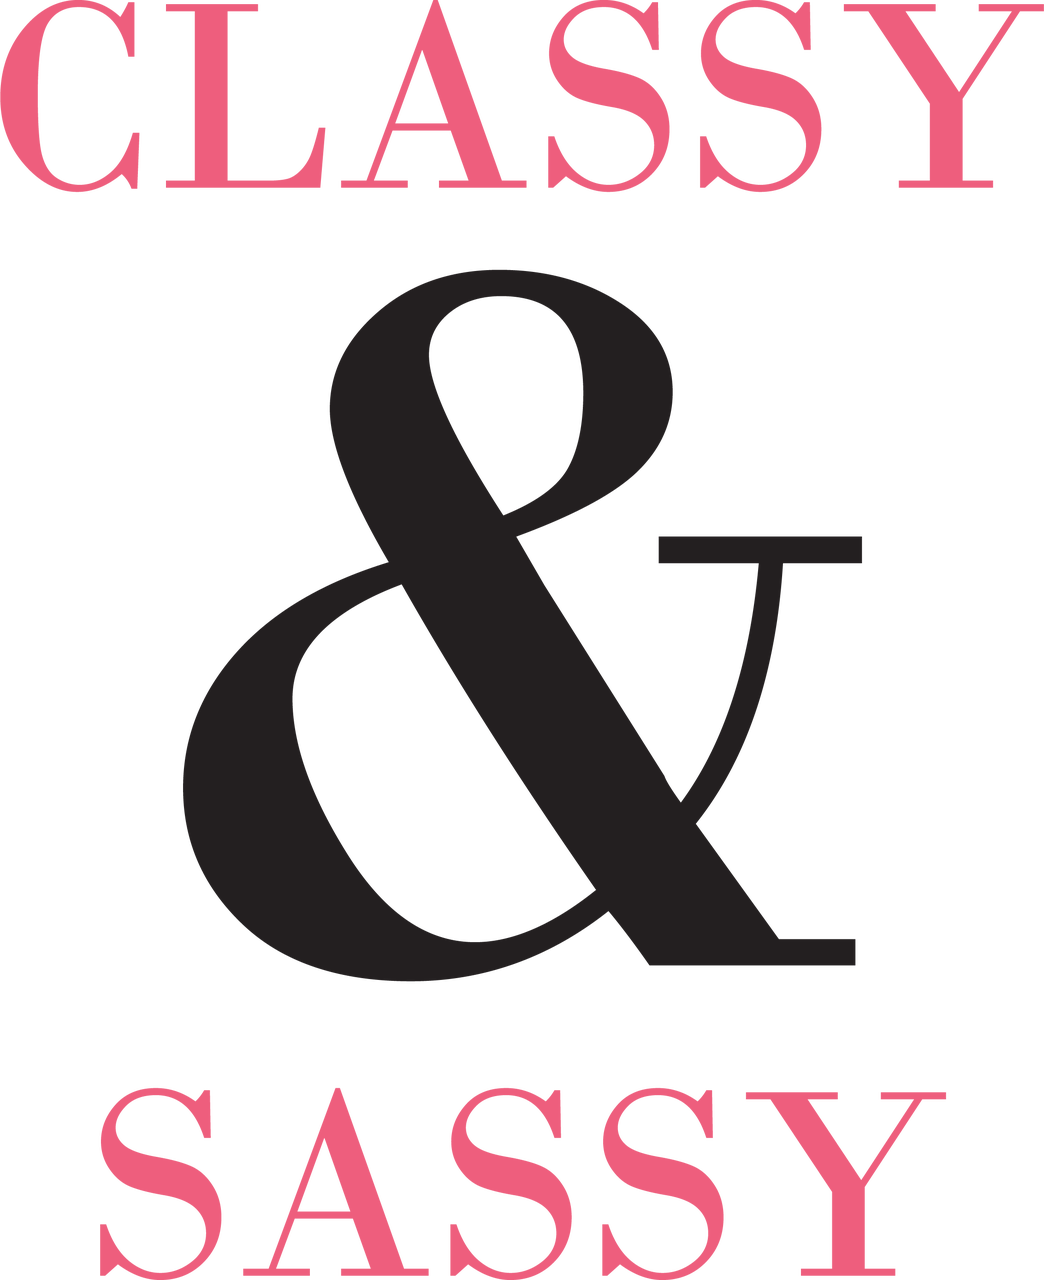 Classy & Sassy SVG Cut File